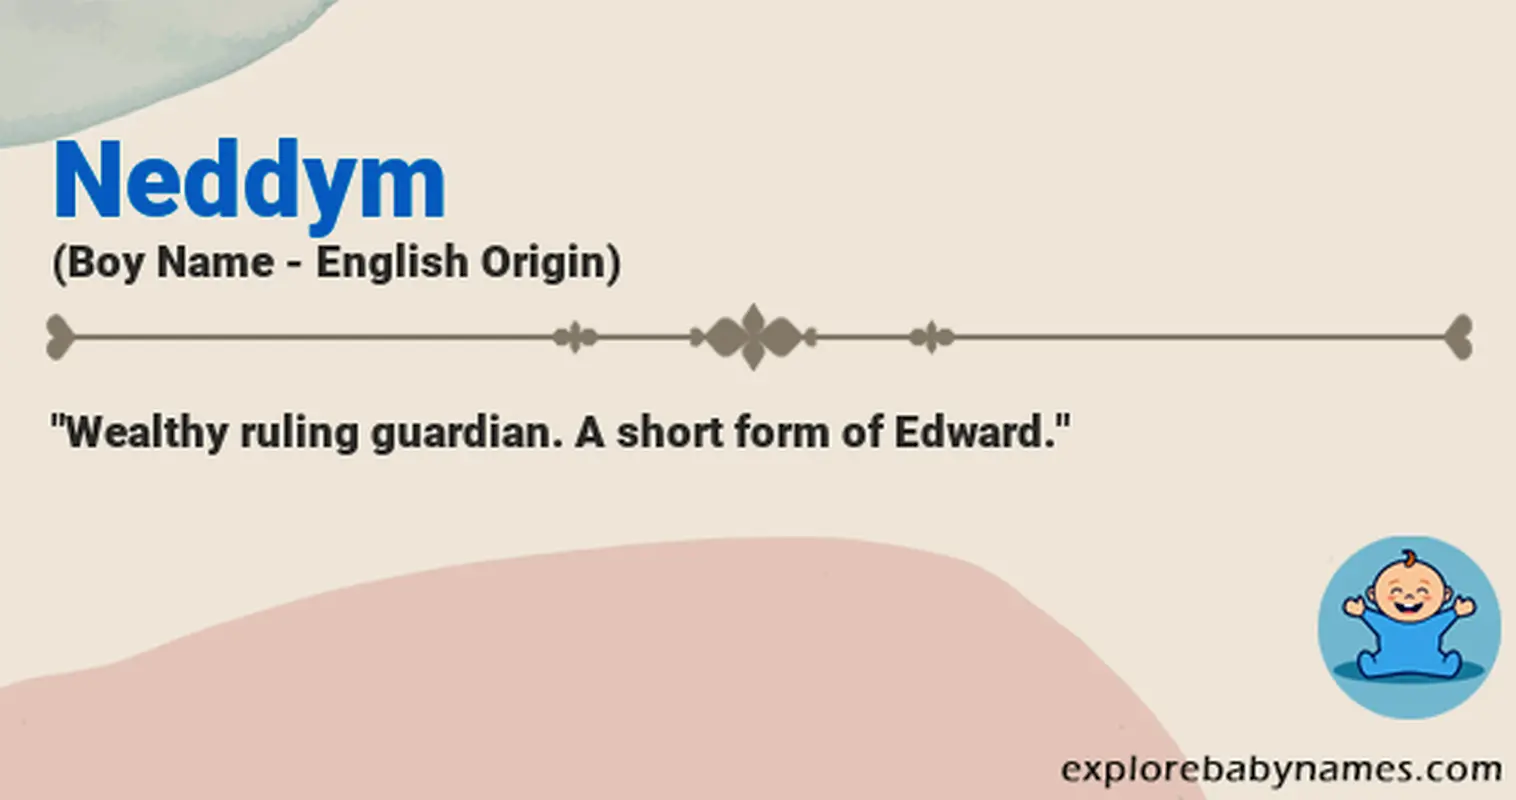 Meaning of Neddym